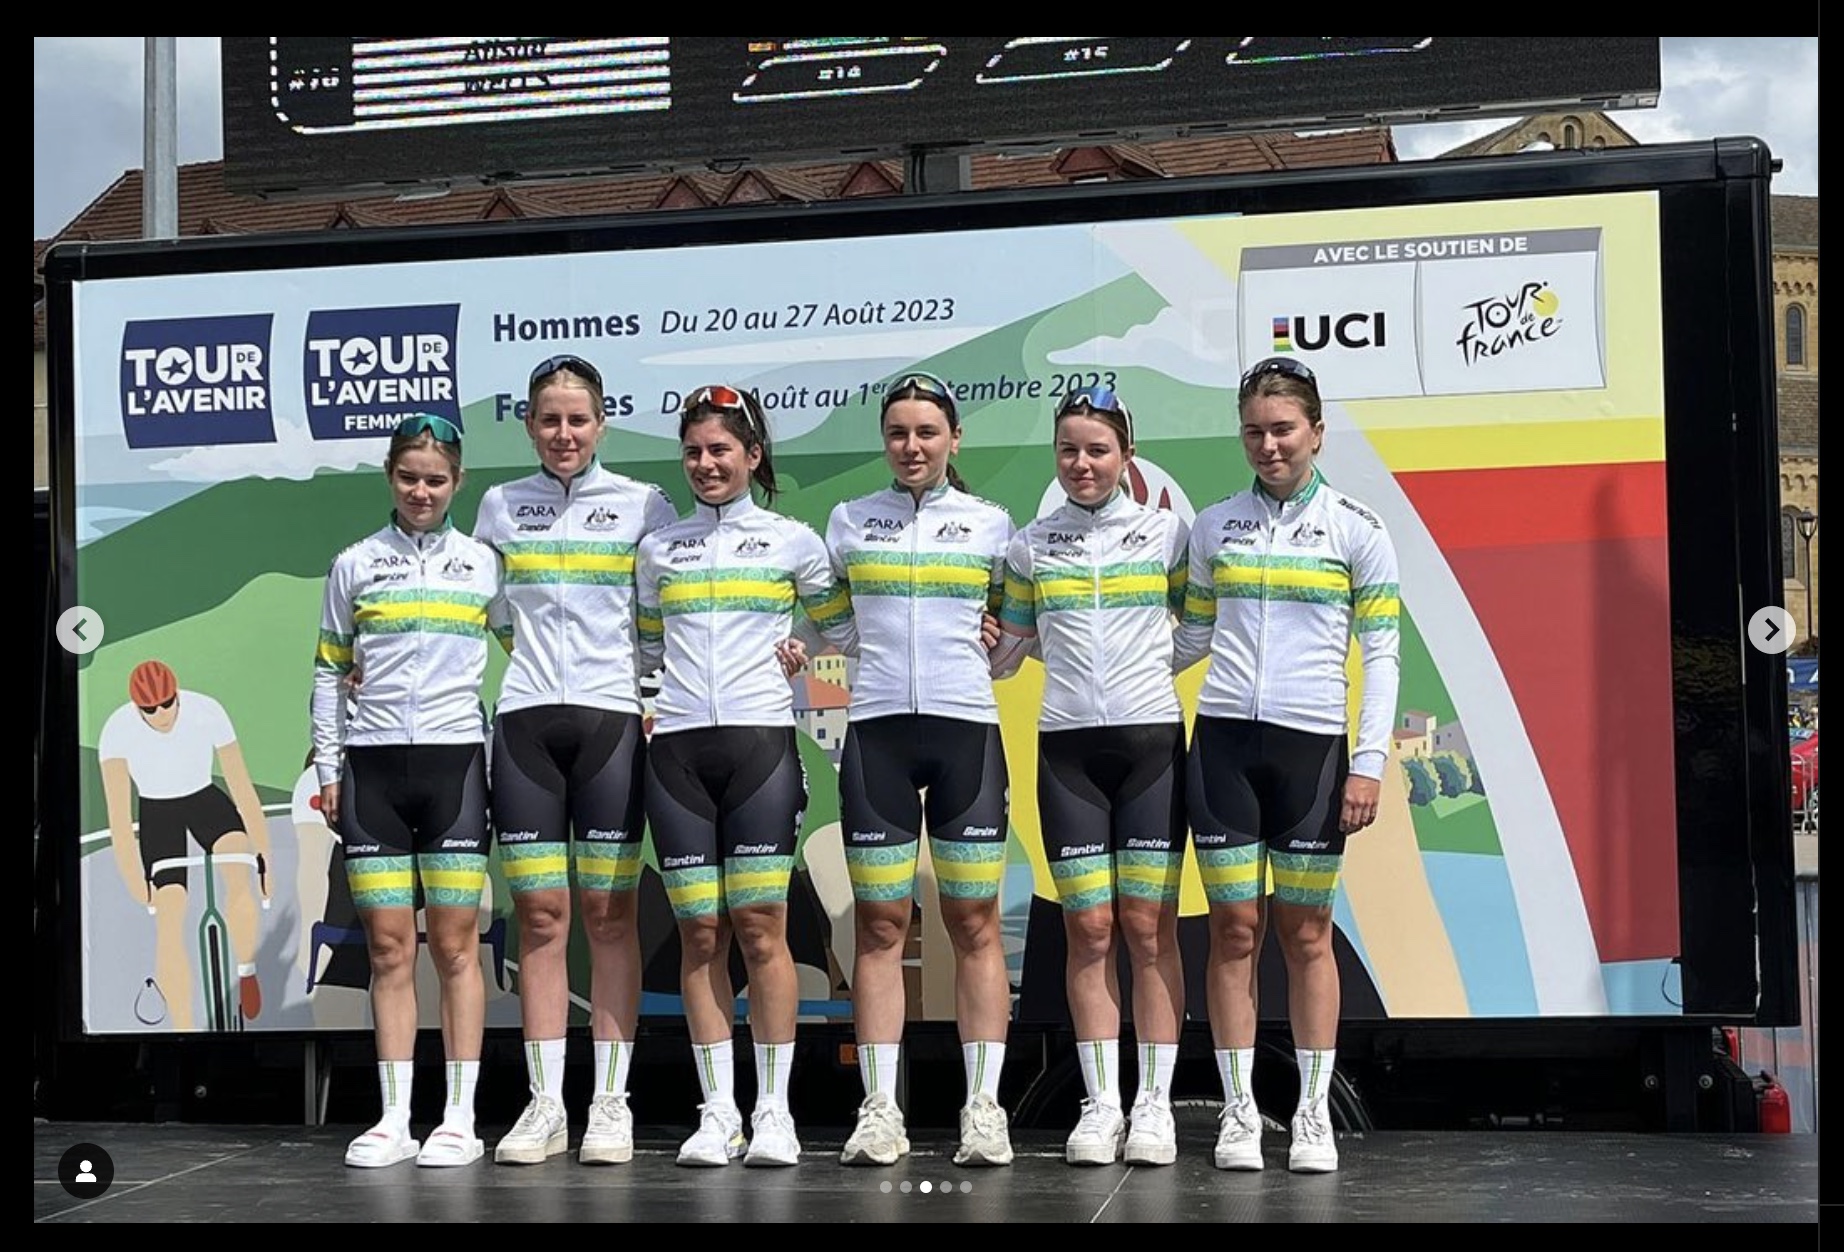 Six female riders in Australian colours line up at the start of the women's Tour de l'Avenir.